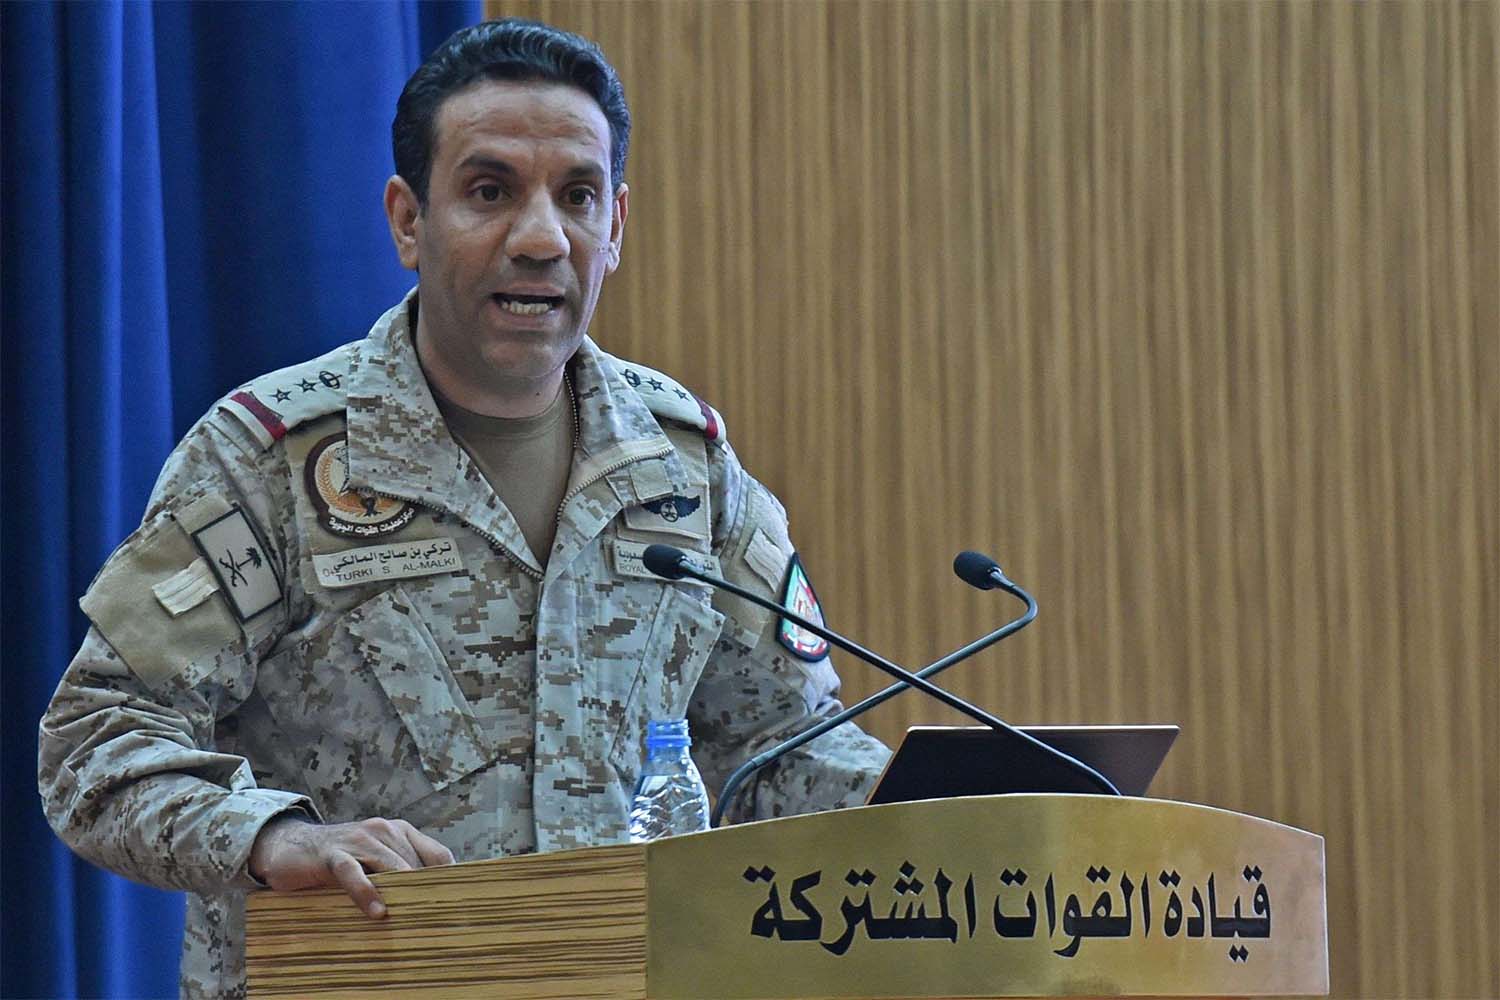 Turki al-Maliki, the military alliance's spokesman